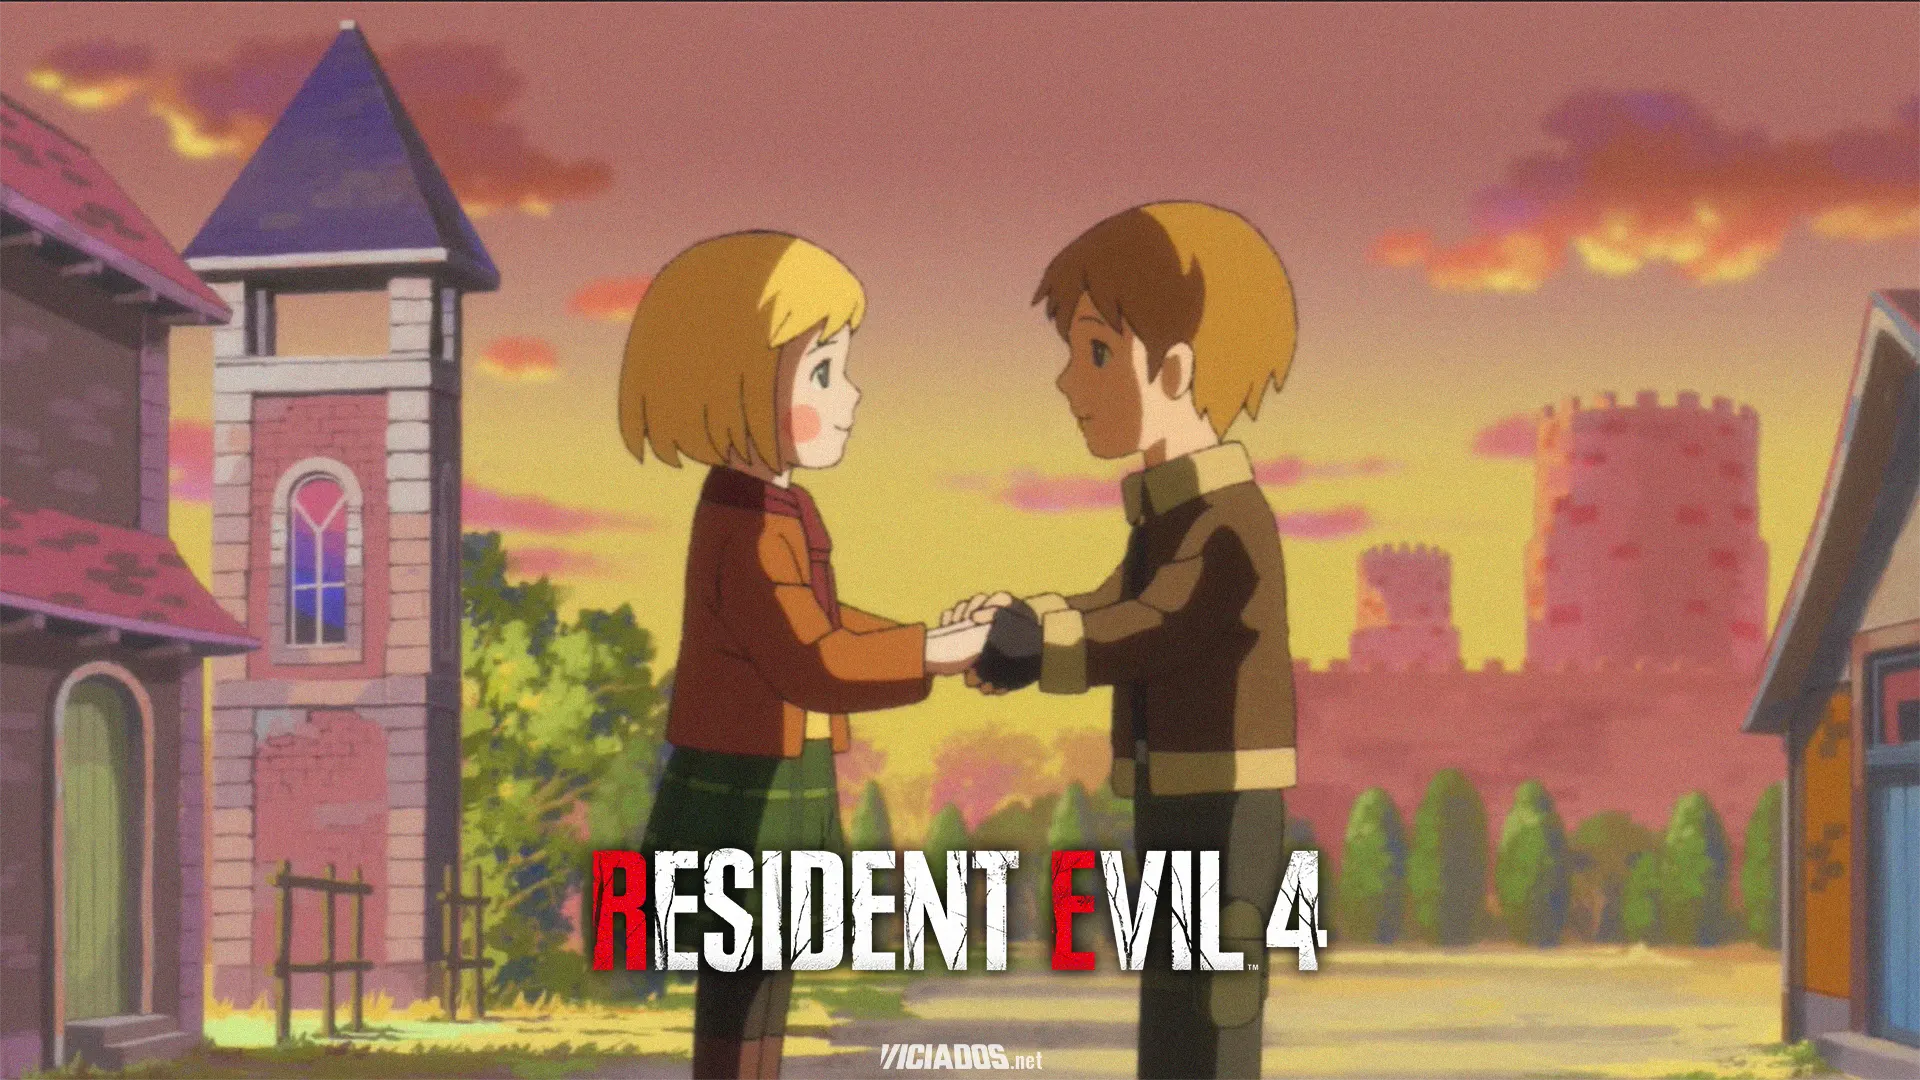 Socorro, Leon! Ashley perturba vida de Leon no segundo episódio do anime de Resident Evil 4 2023 Viciados